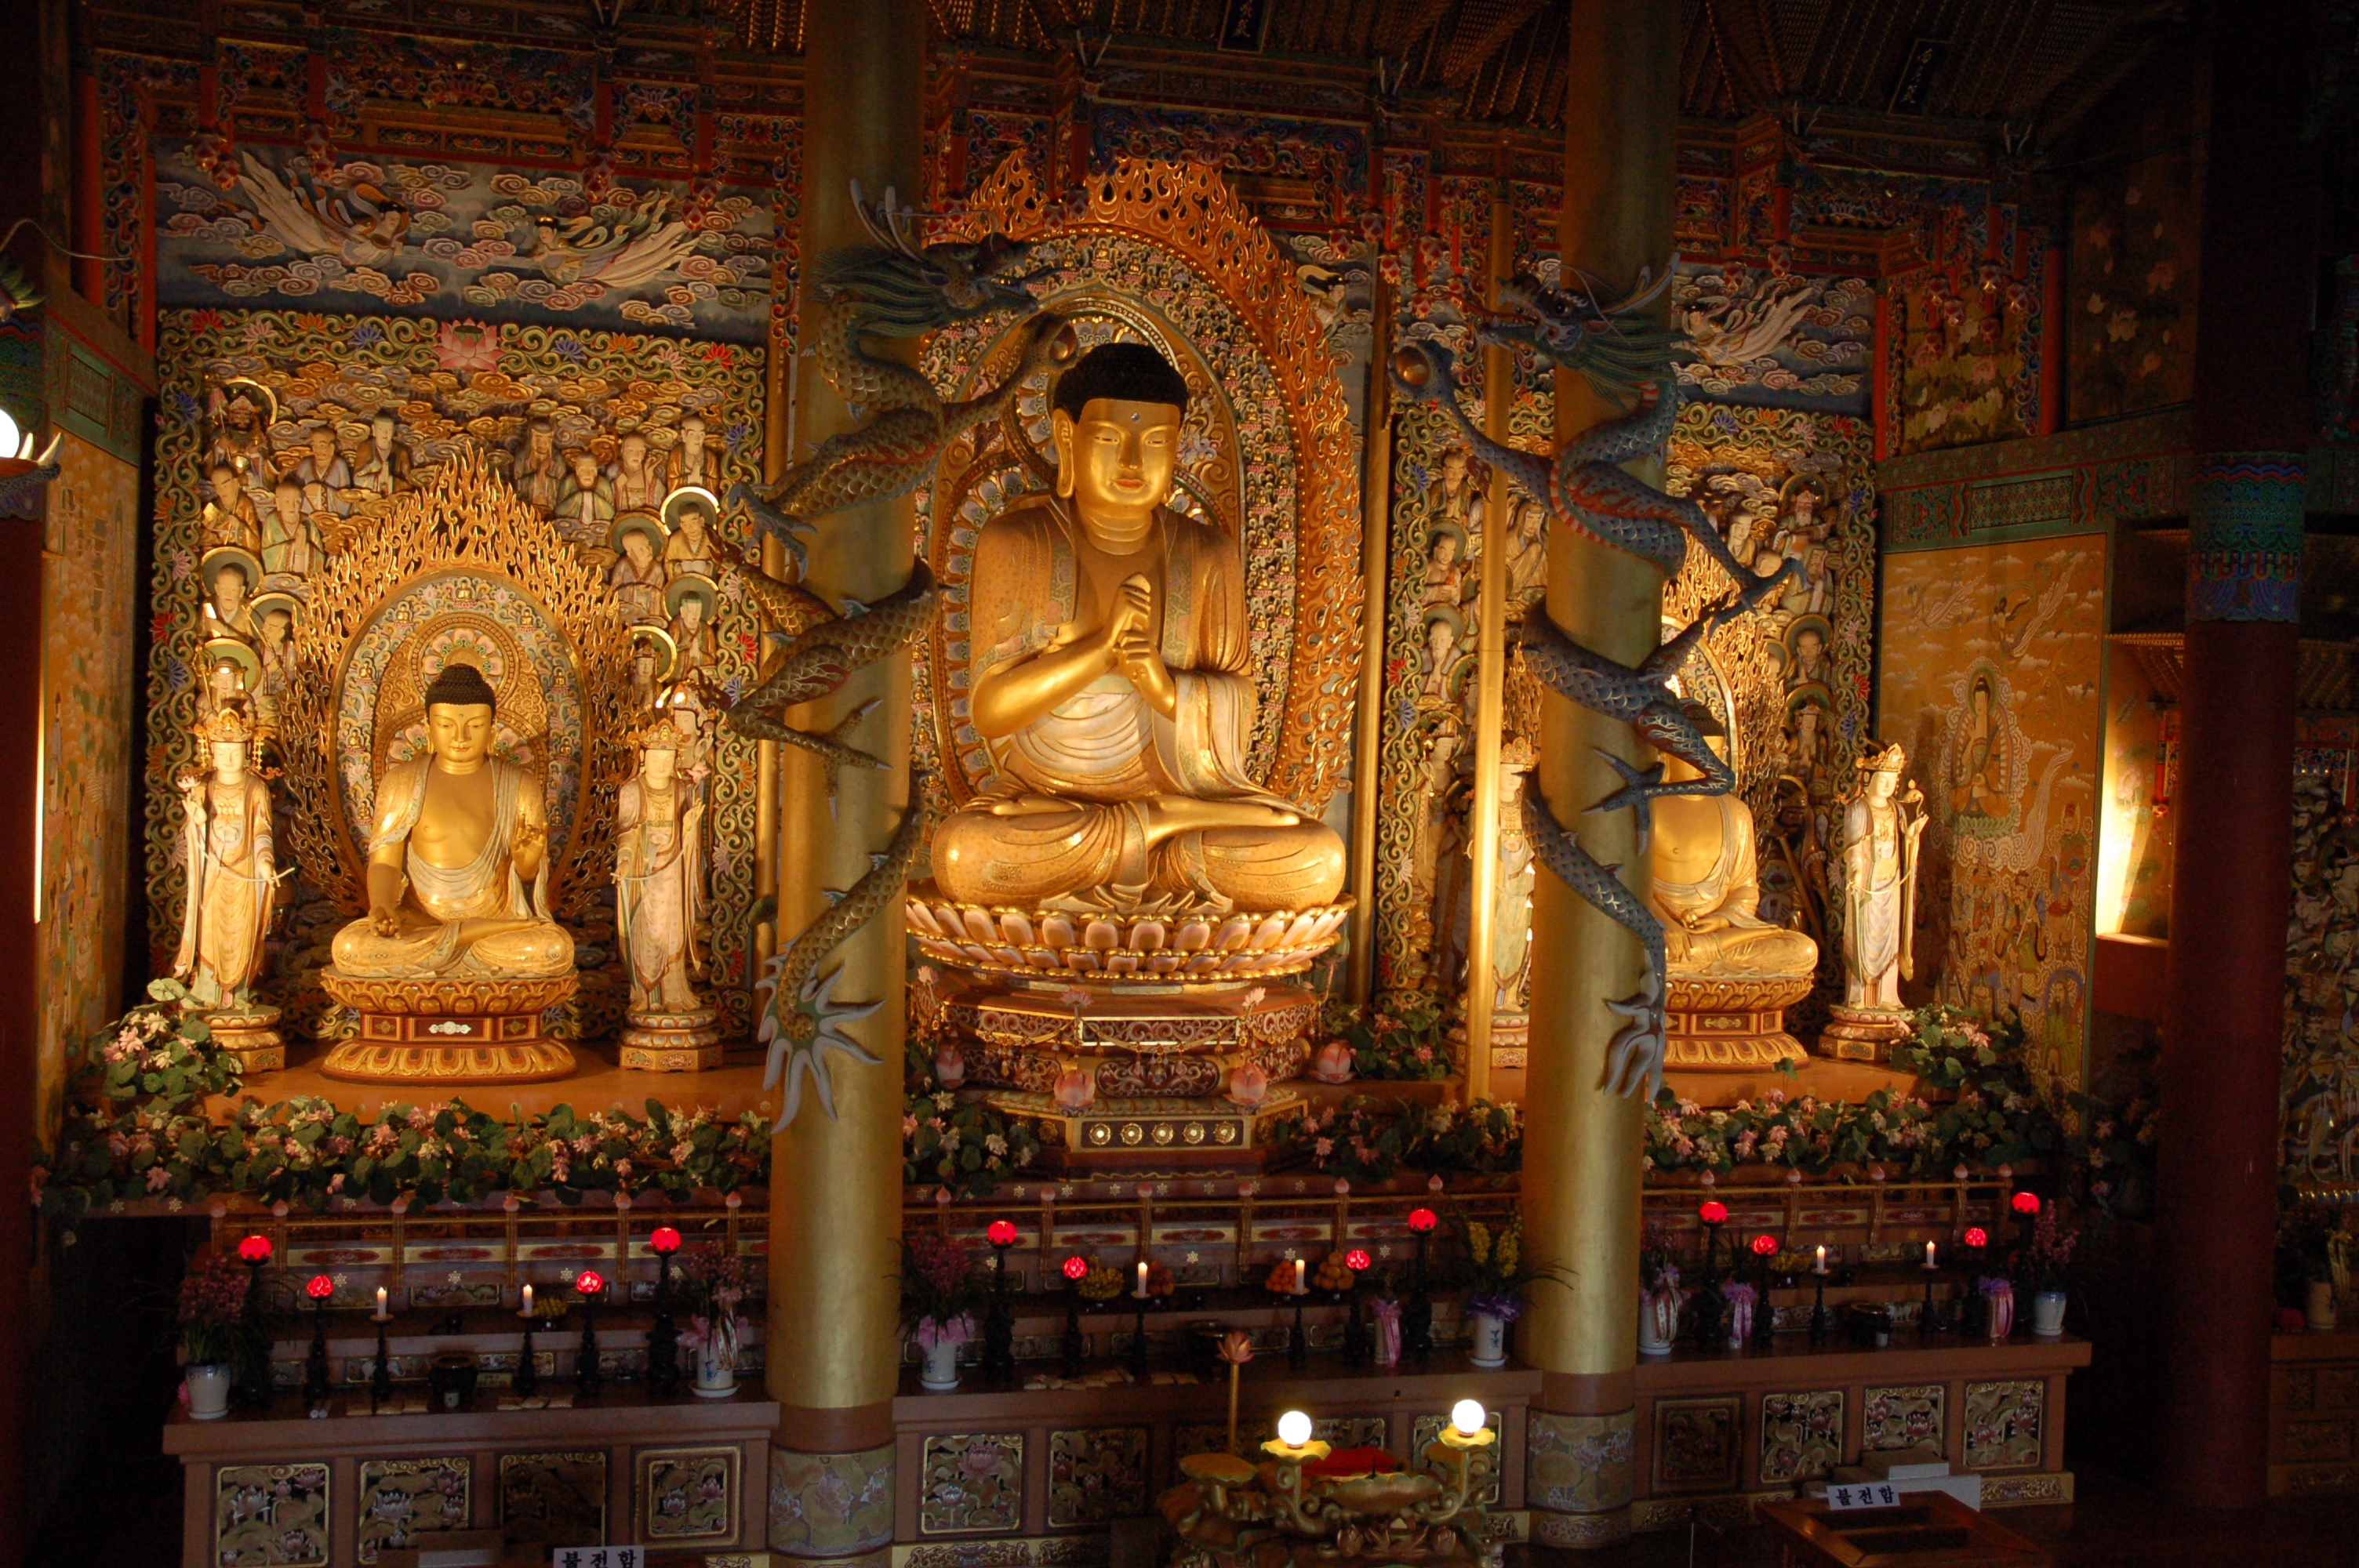 Реферат: Buddha Essay Research Paper BuddhaThe word Buddha